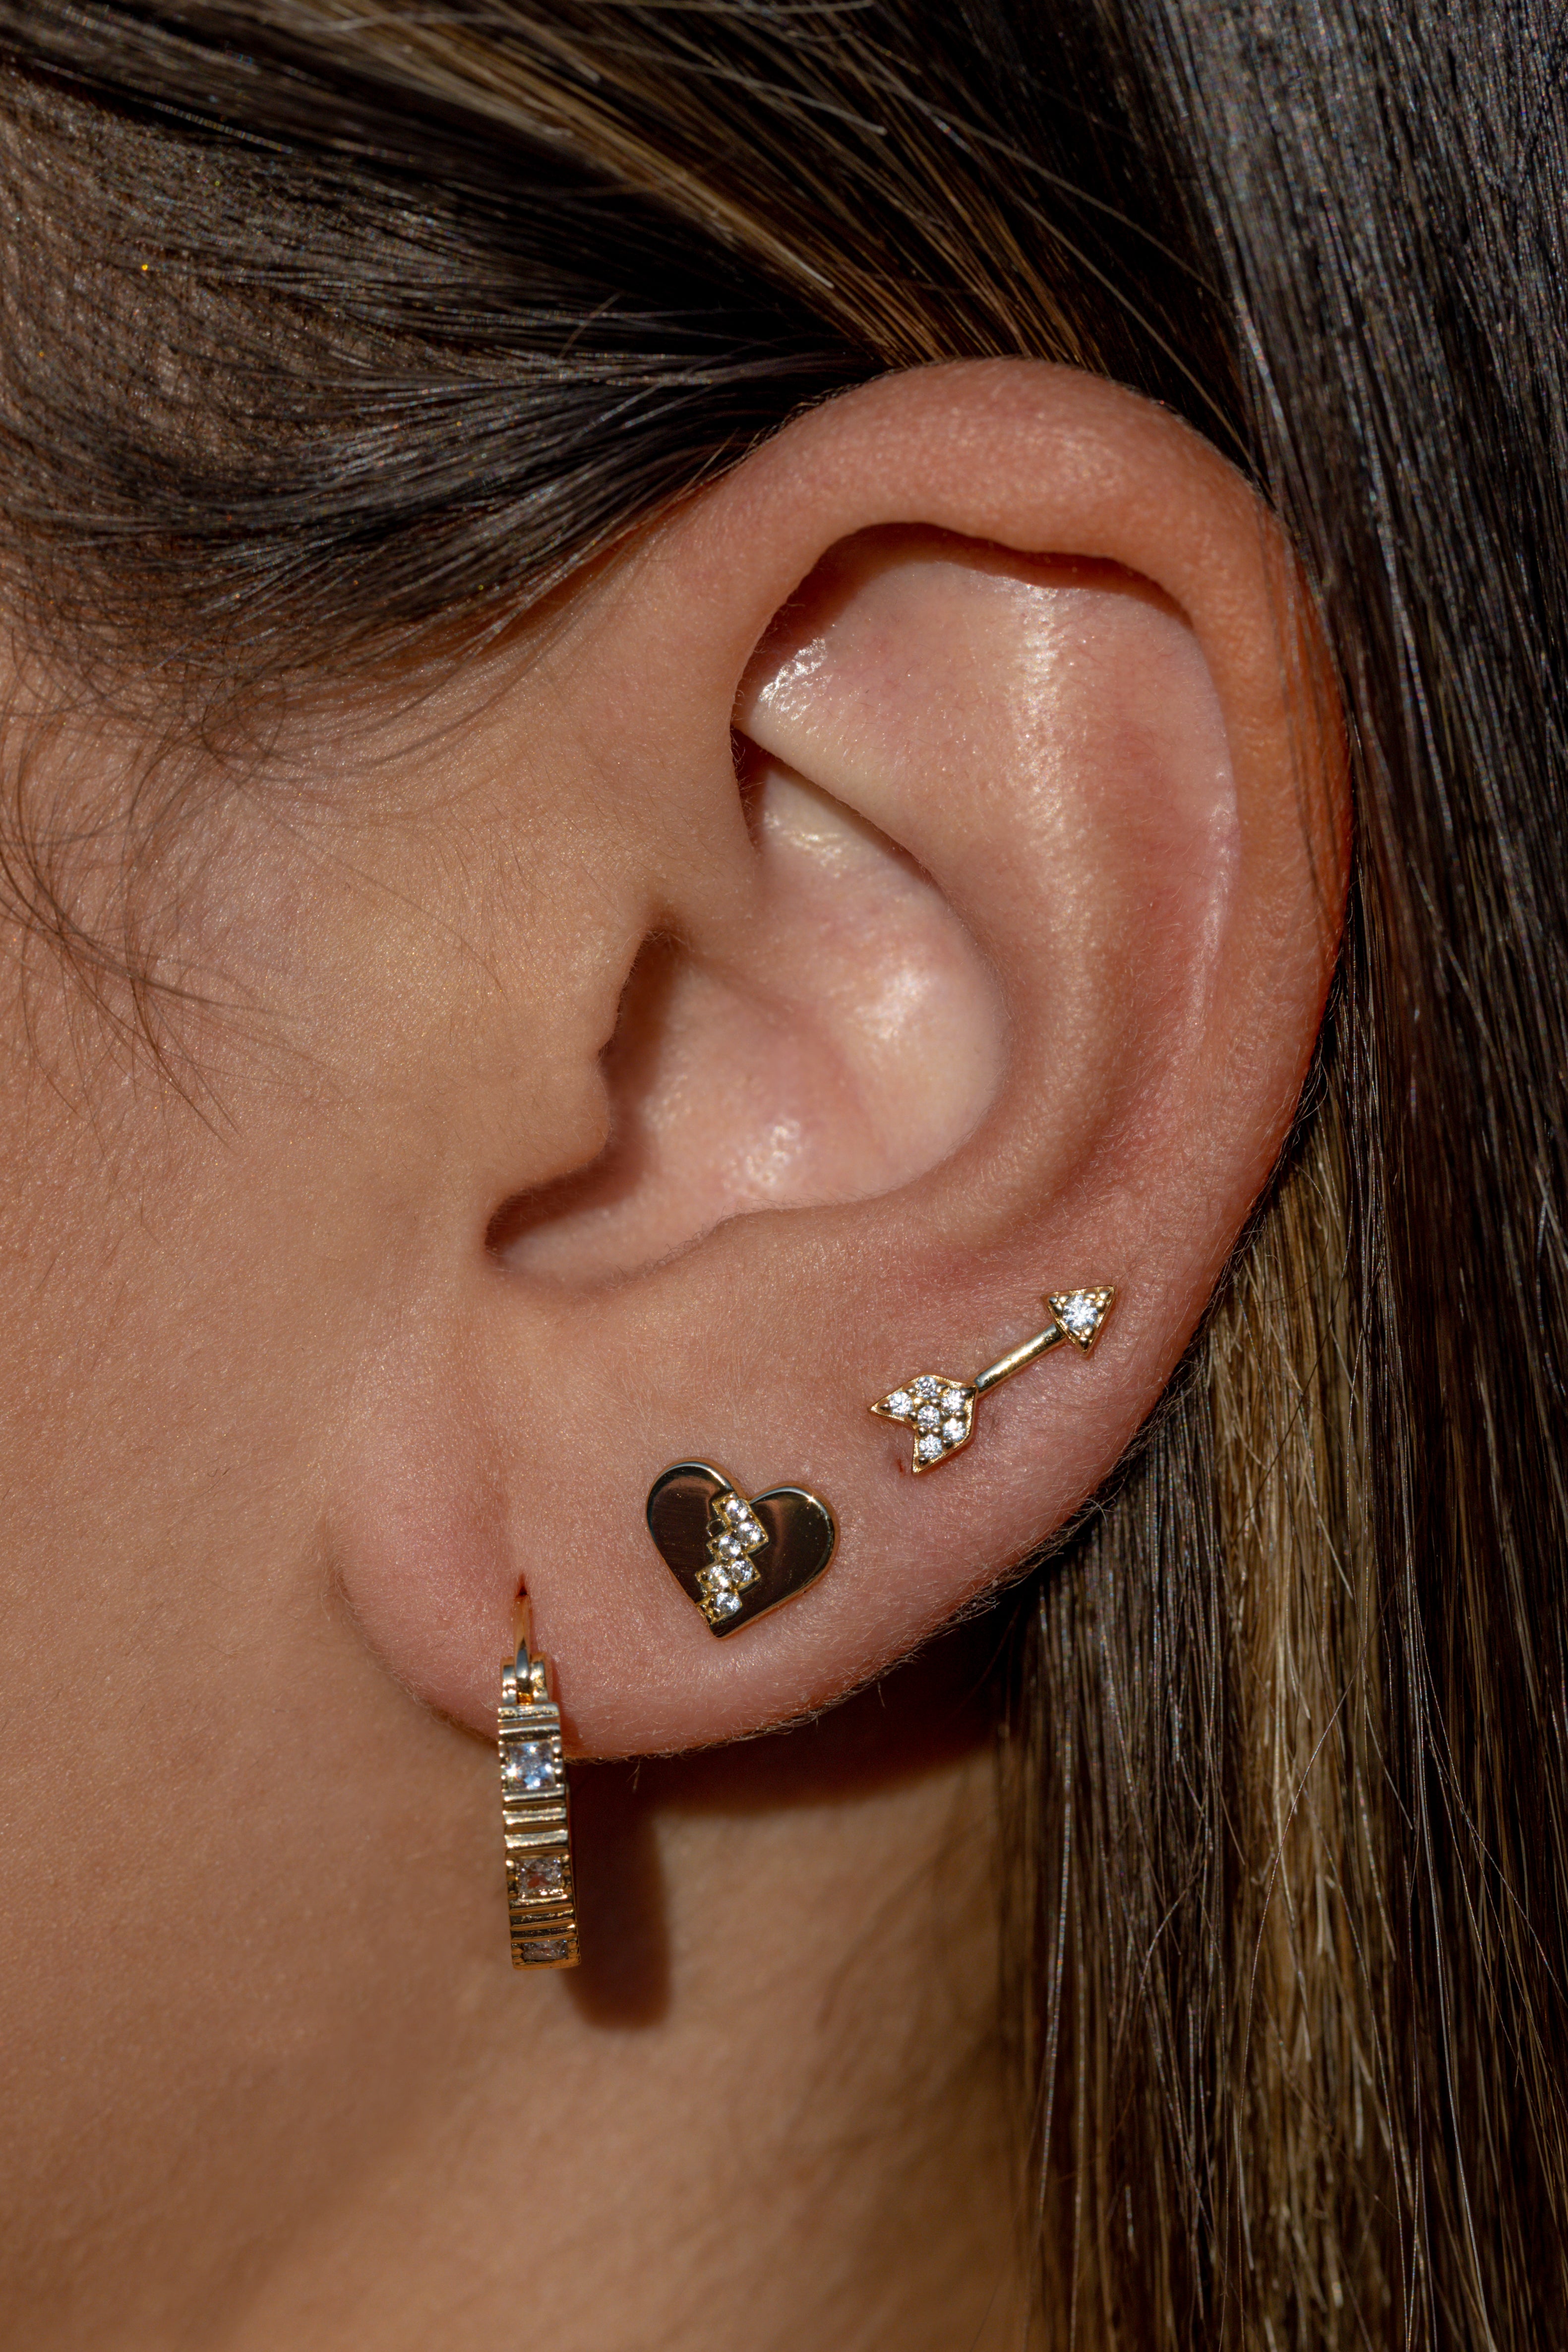 Tito earrings